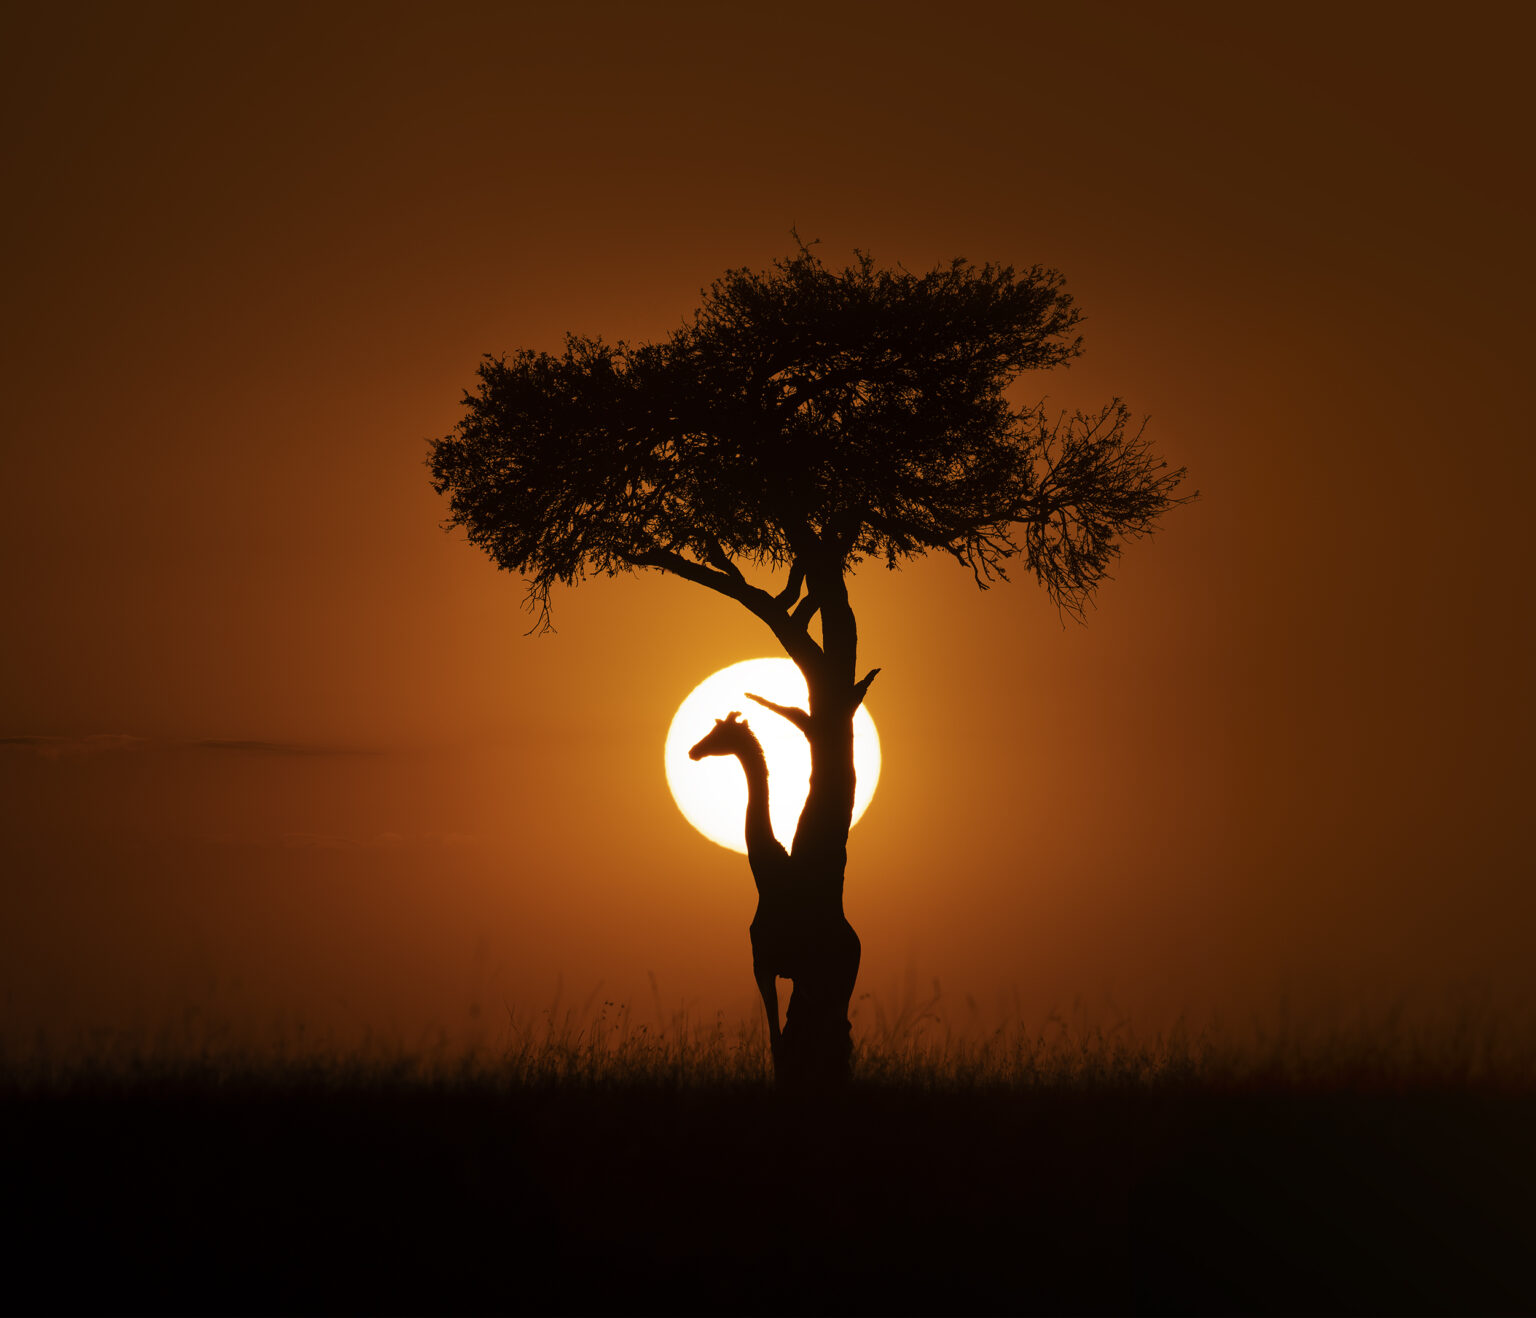 KENYA UNFORGETTABLE- Masai Mara